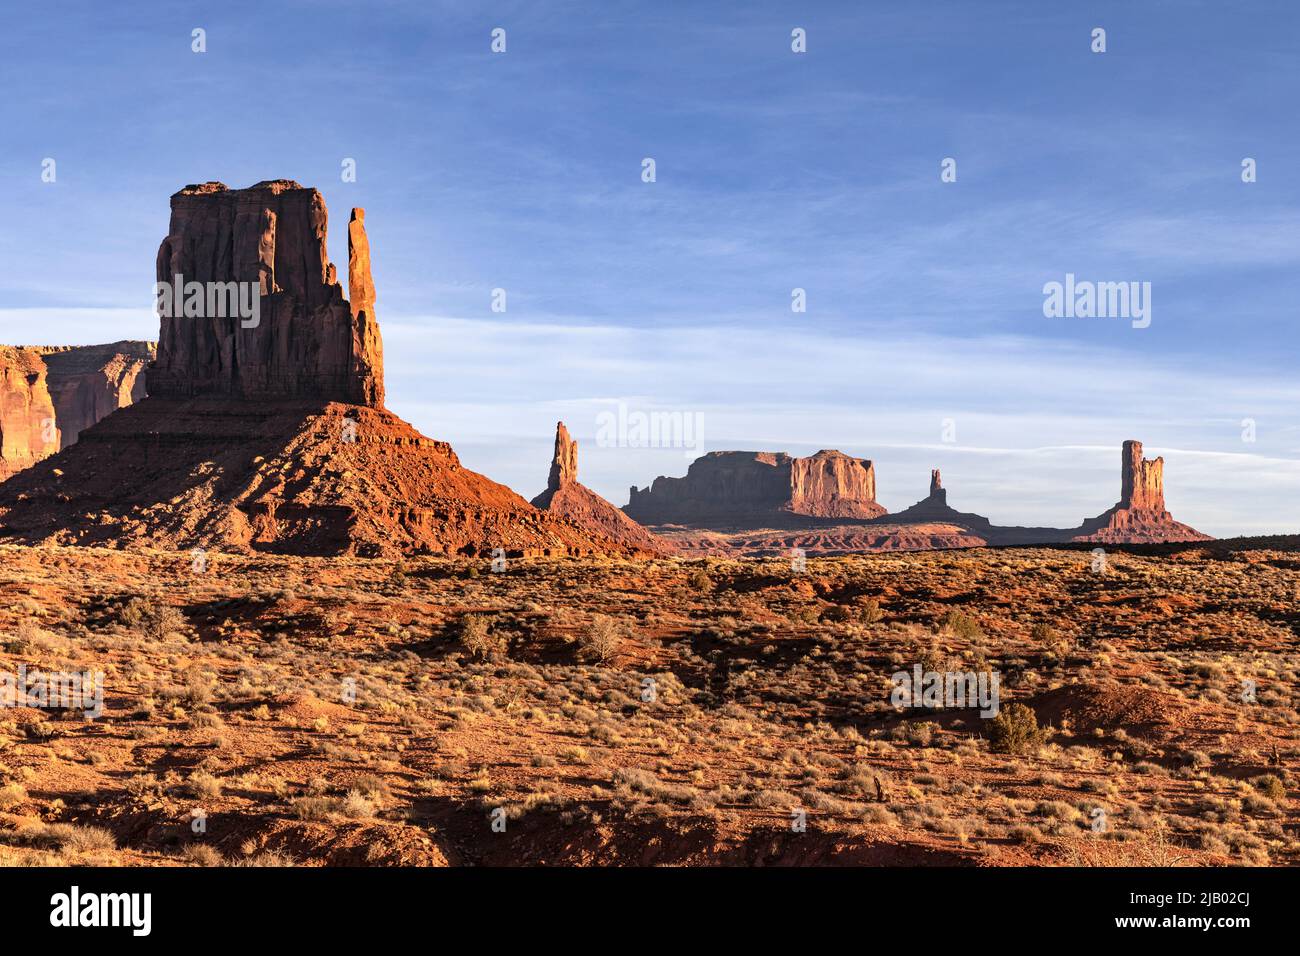 AZ00422-00....ARIZONA - Sandsteinbutten im Monument Valley Navajo Tribal Park. Stockfoto